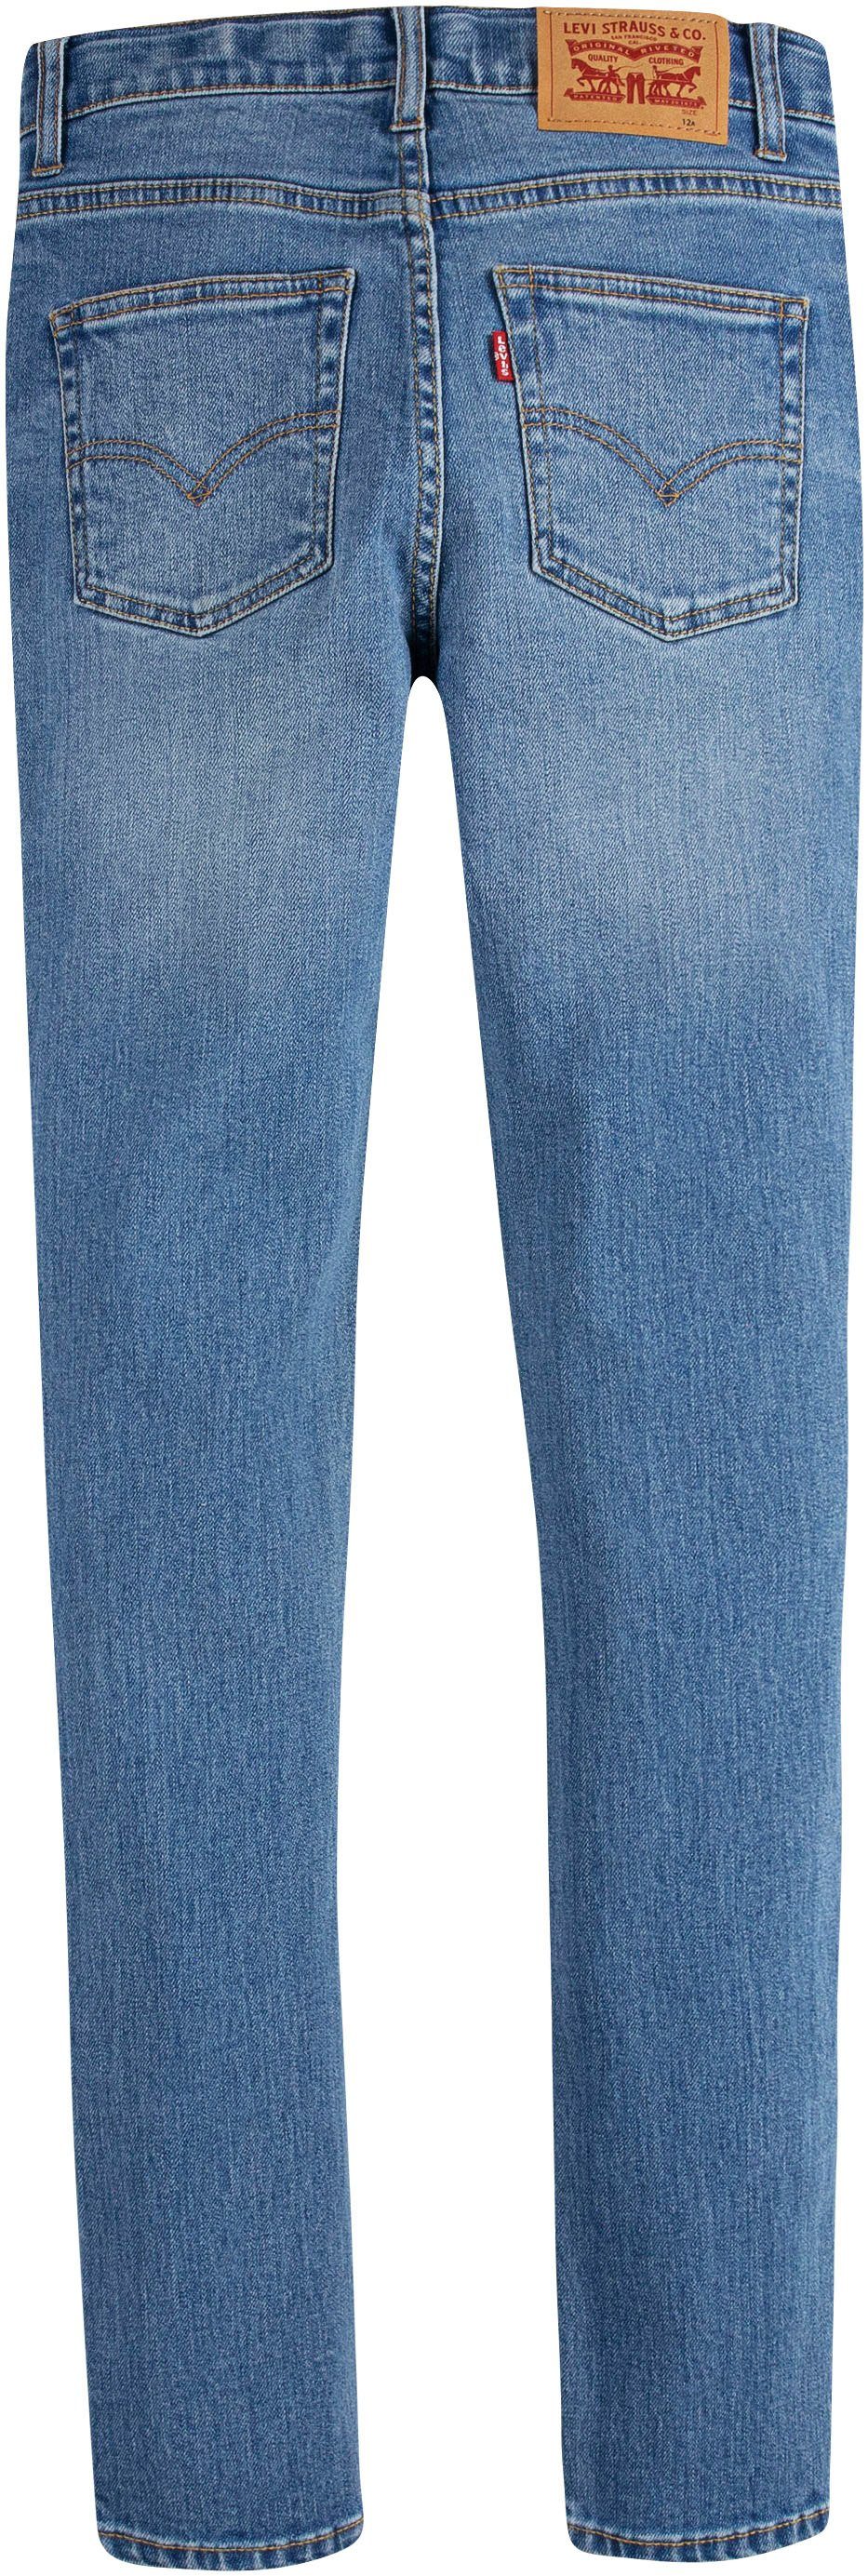 SKINNY JEANS denim Levi's® Skinny-fit-Jeans for BOYS blue TAPER used Kids